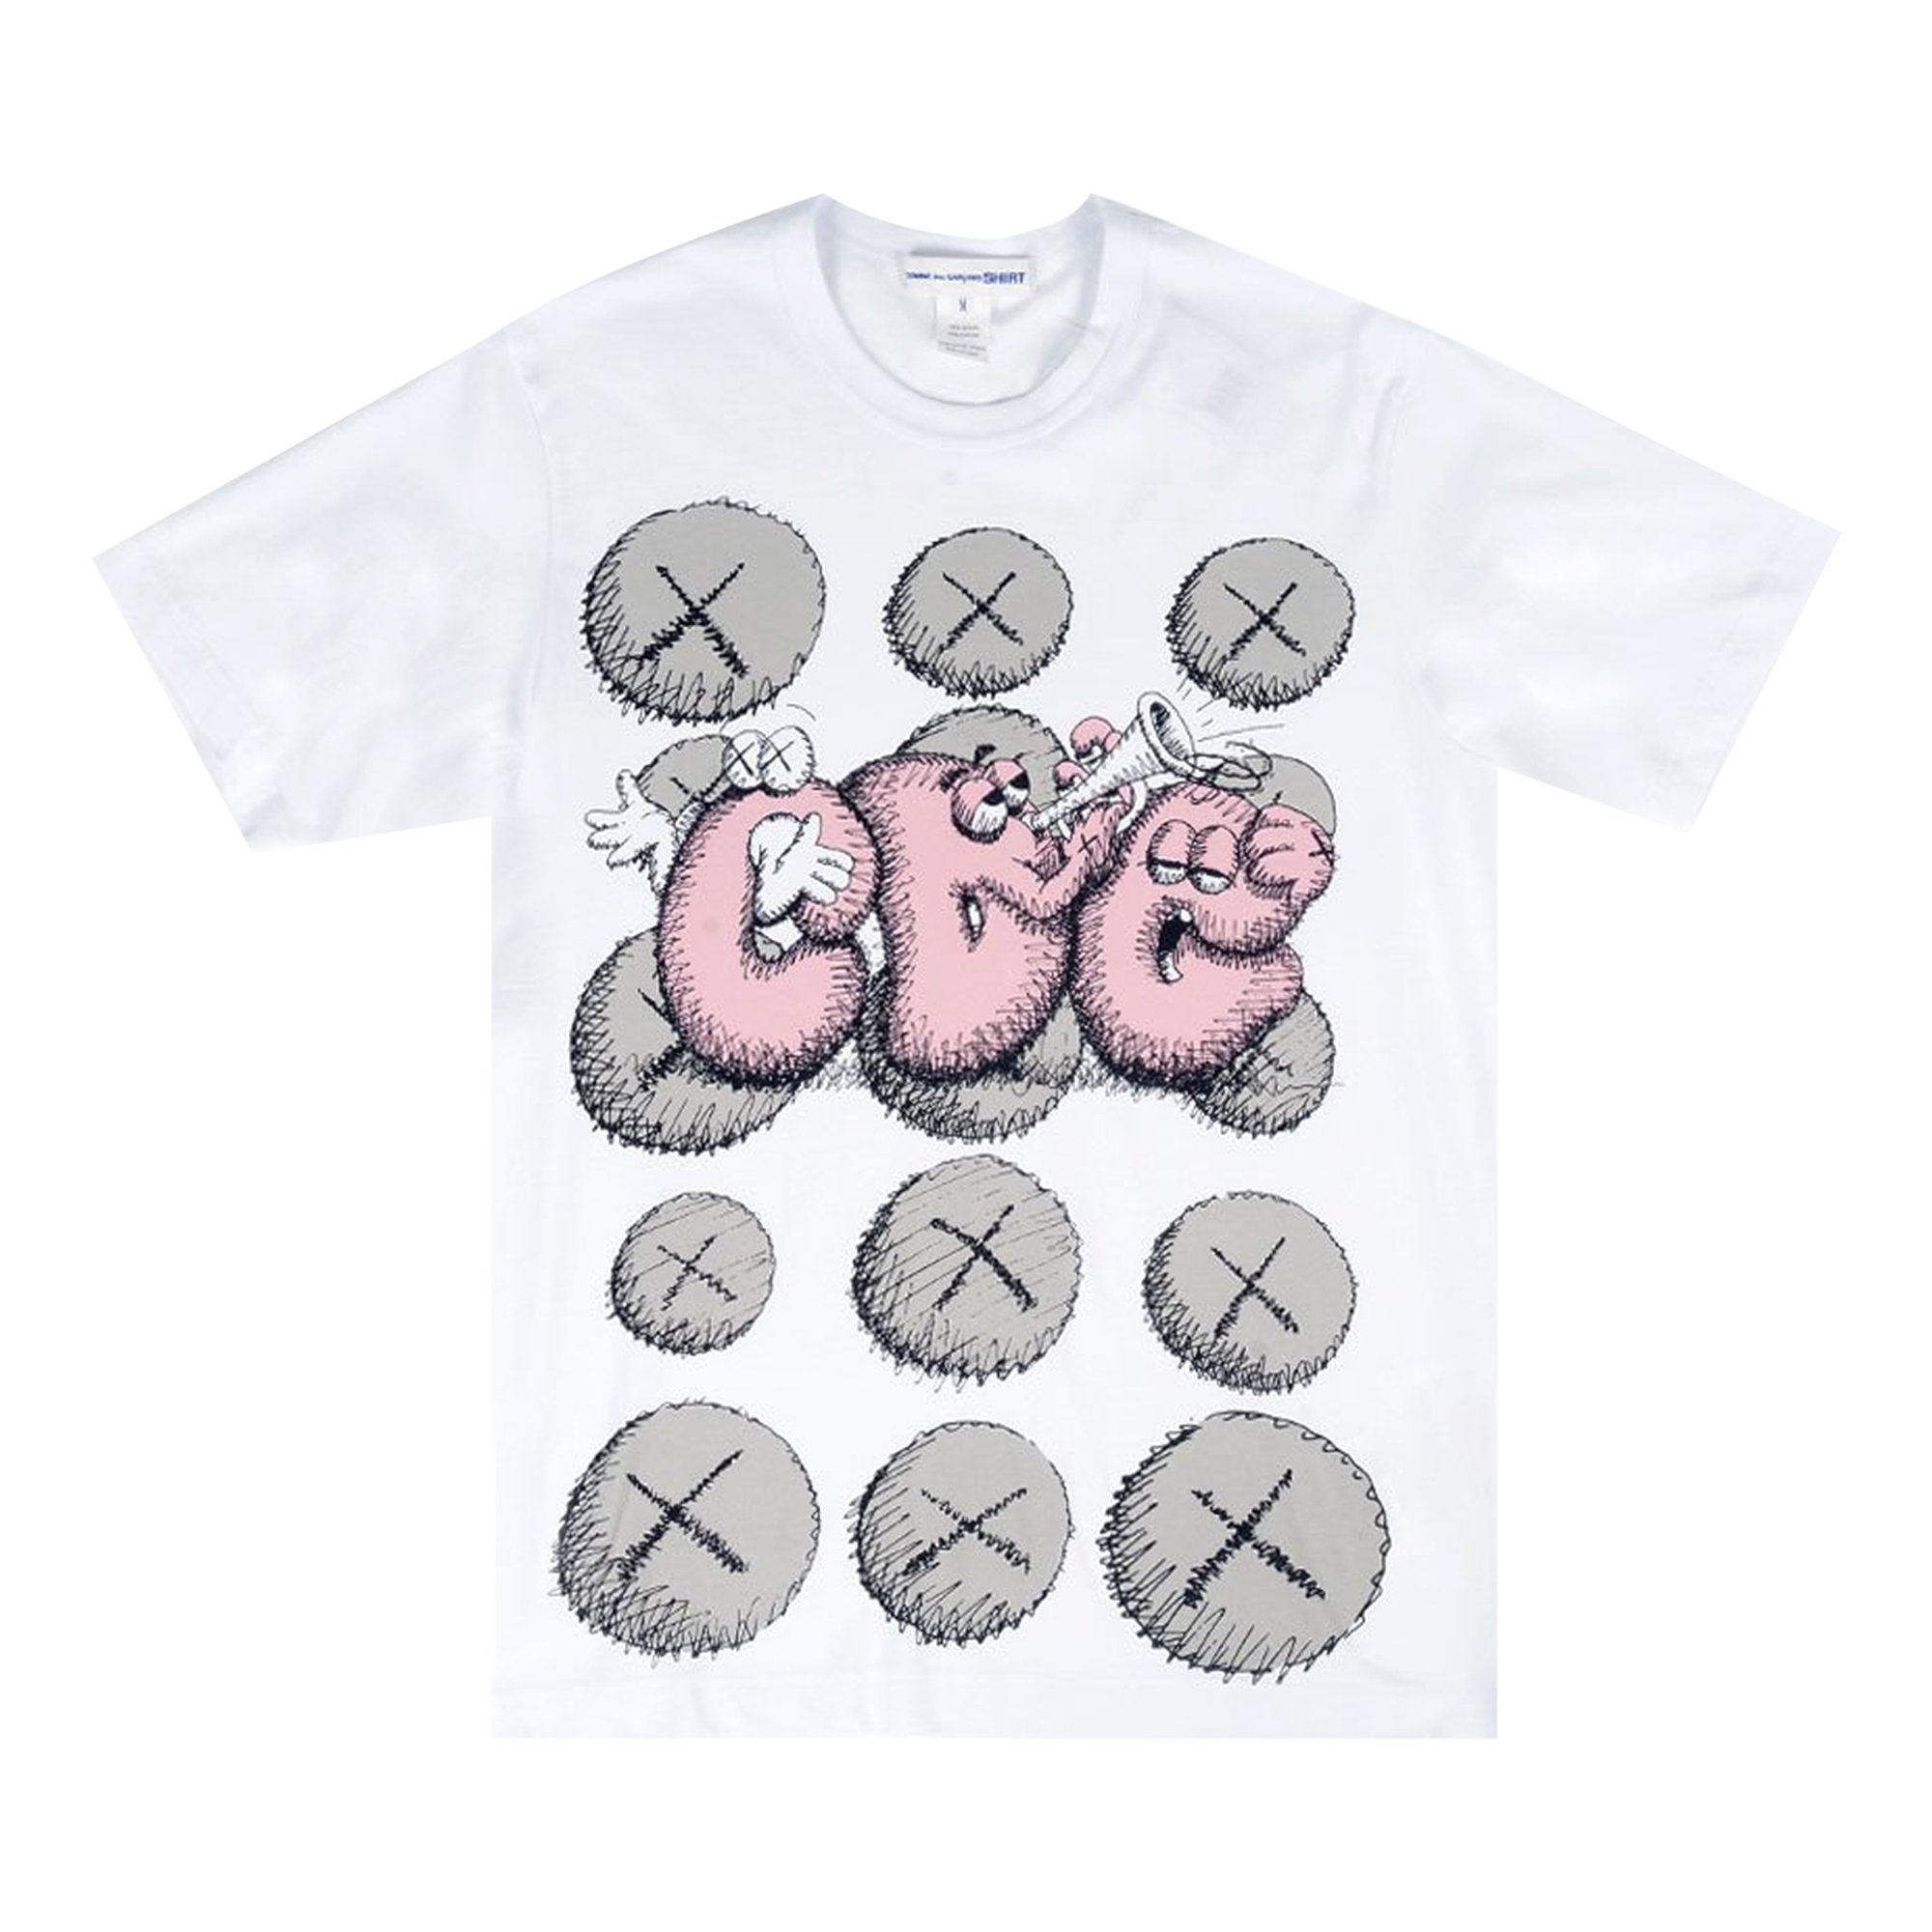 Comme des Garçons SHIRT x KAWS Print T-Shirt 'White' | GOAT